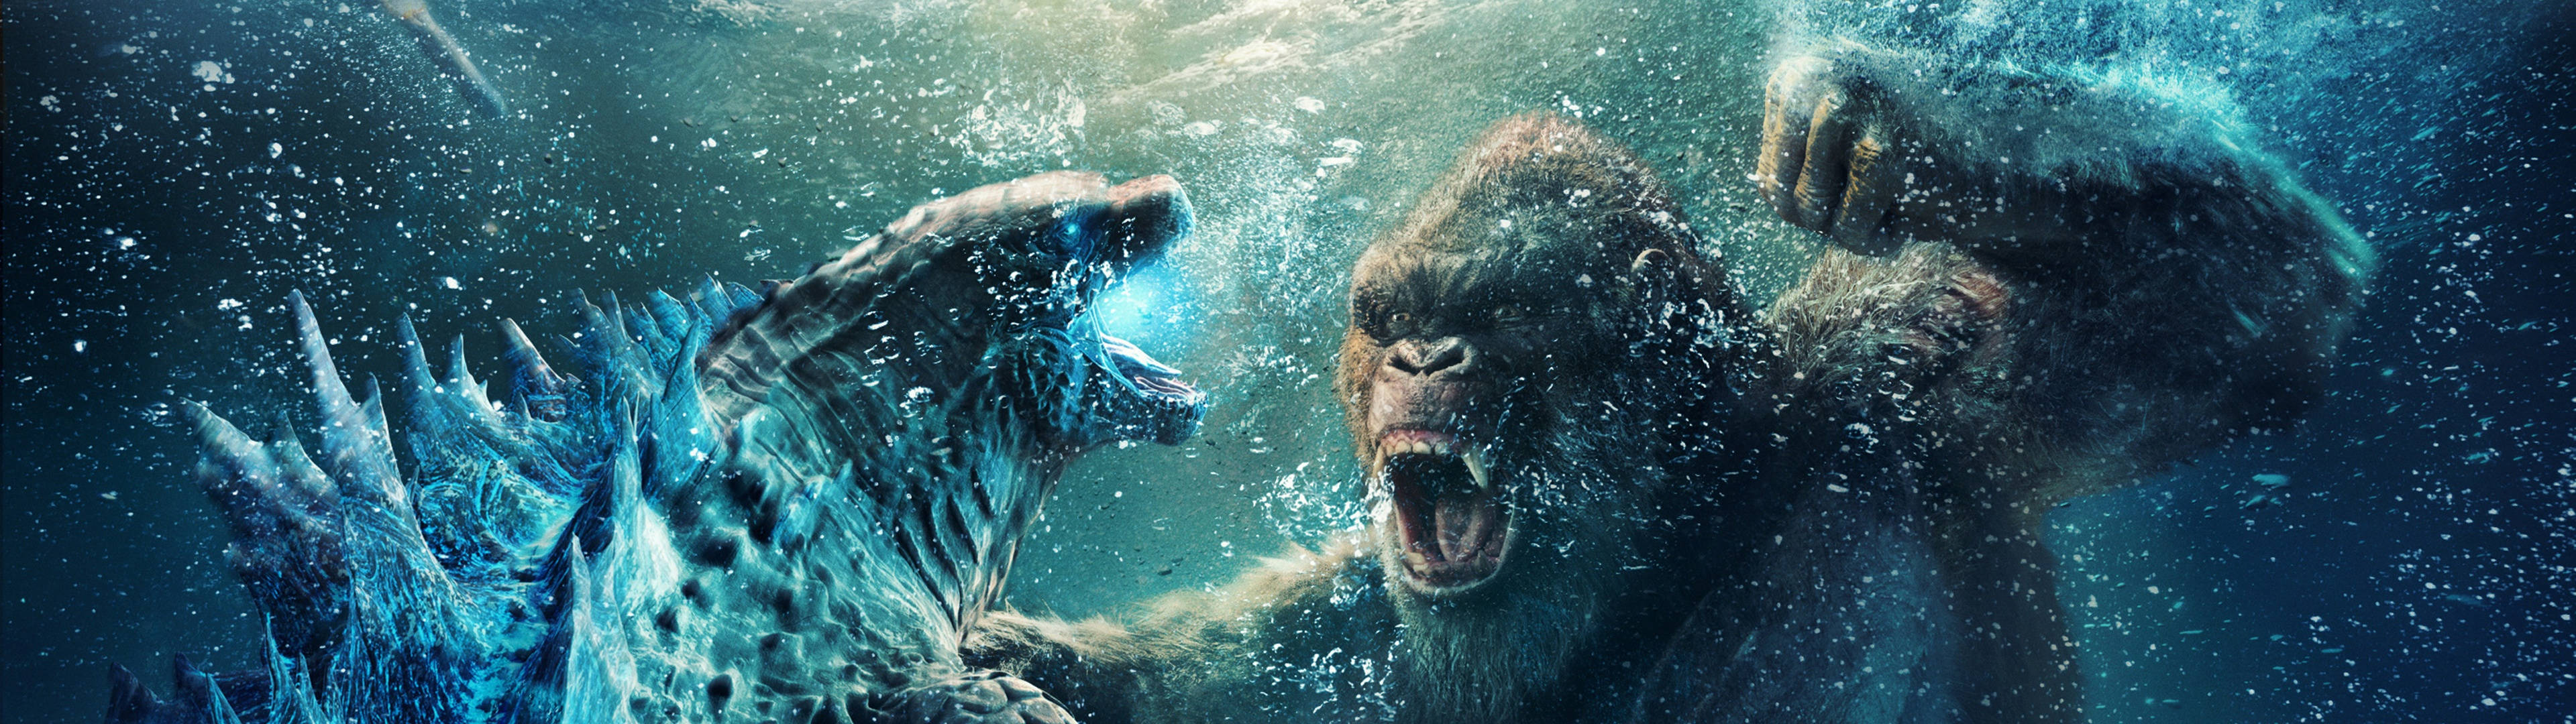 Godzilla Vs King Kong - Hd 720p Wallpaper